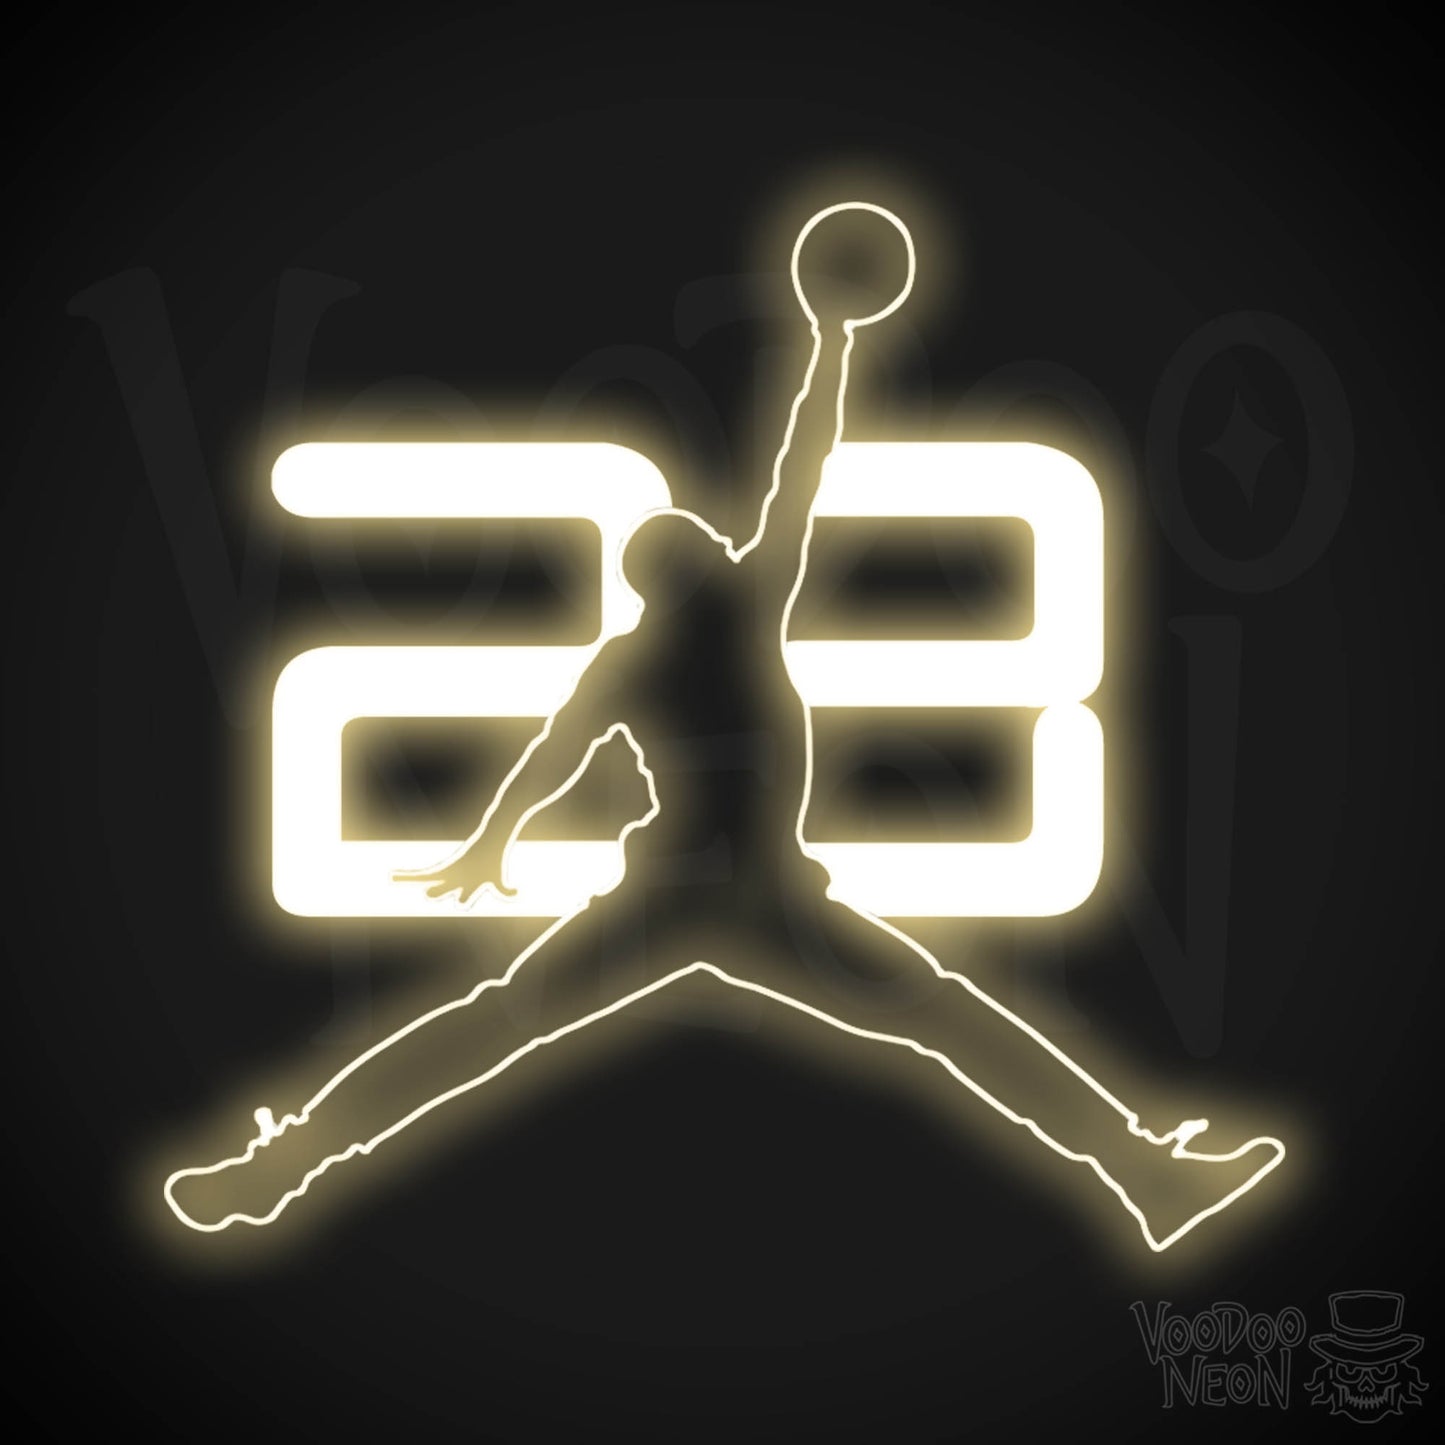 Neon Jordan Dunk - Michael Jordan Neon Wall Art - Neon Basketball Dunk Sign - Color Warm White